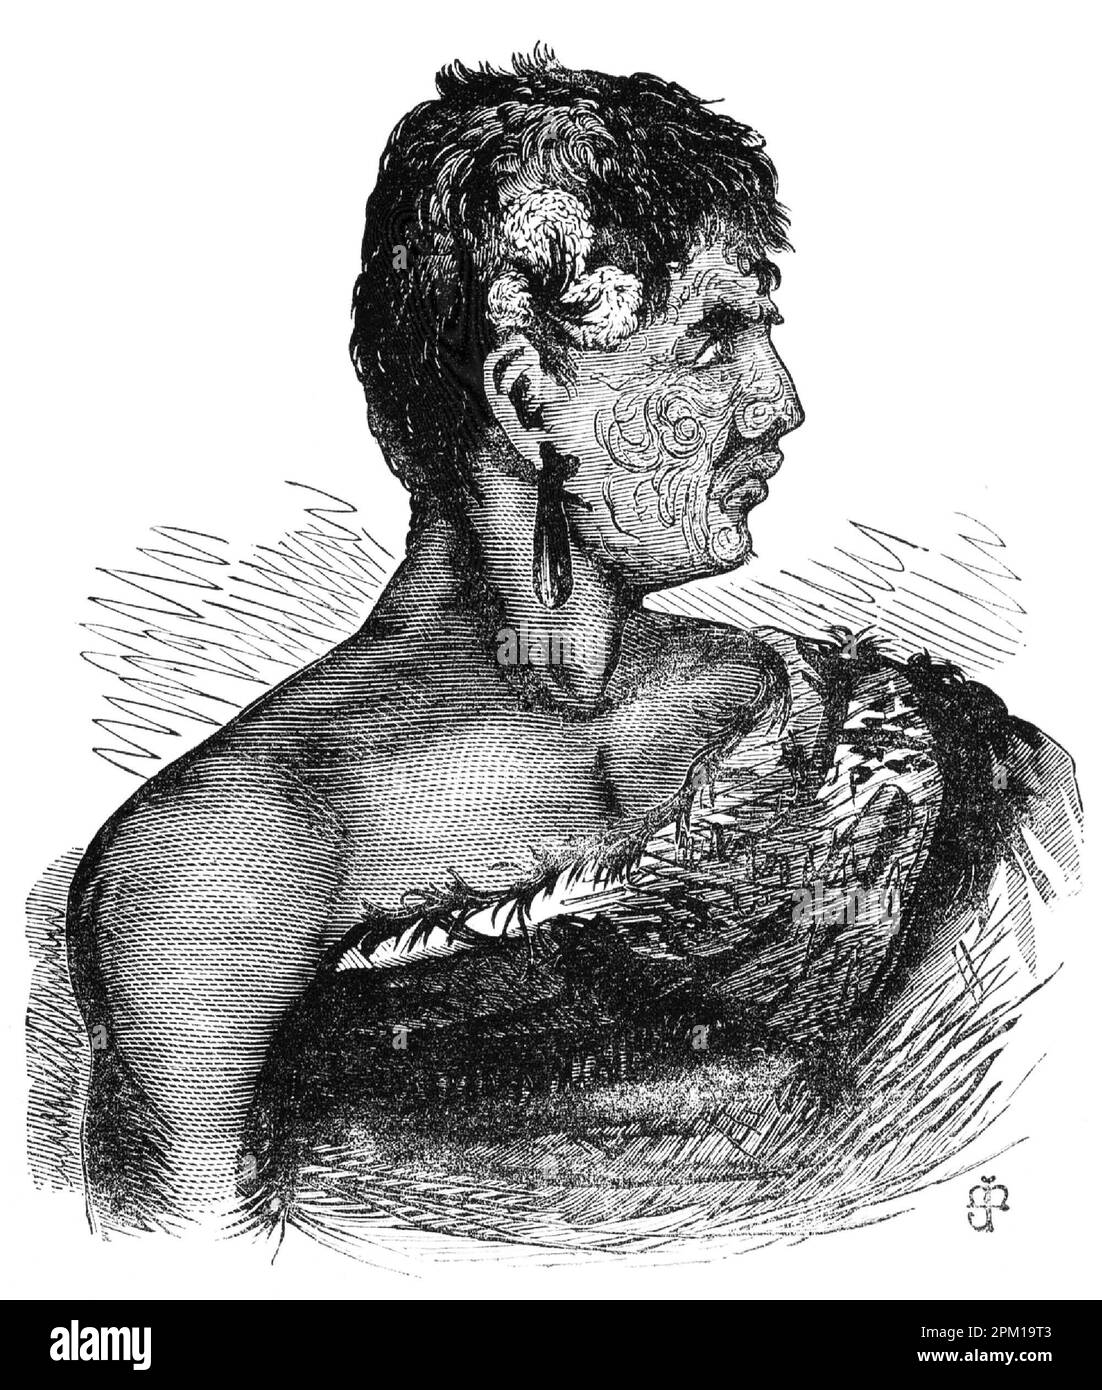 Portrait of Titokowaru, a Maori chief during the Maori Land Wars in New Zealand in the 1860s. Stock Photo